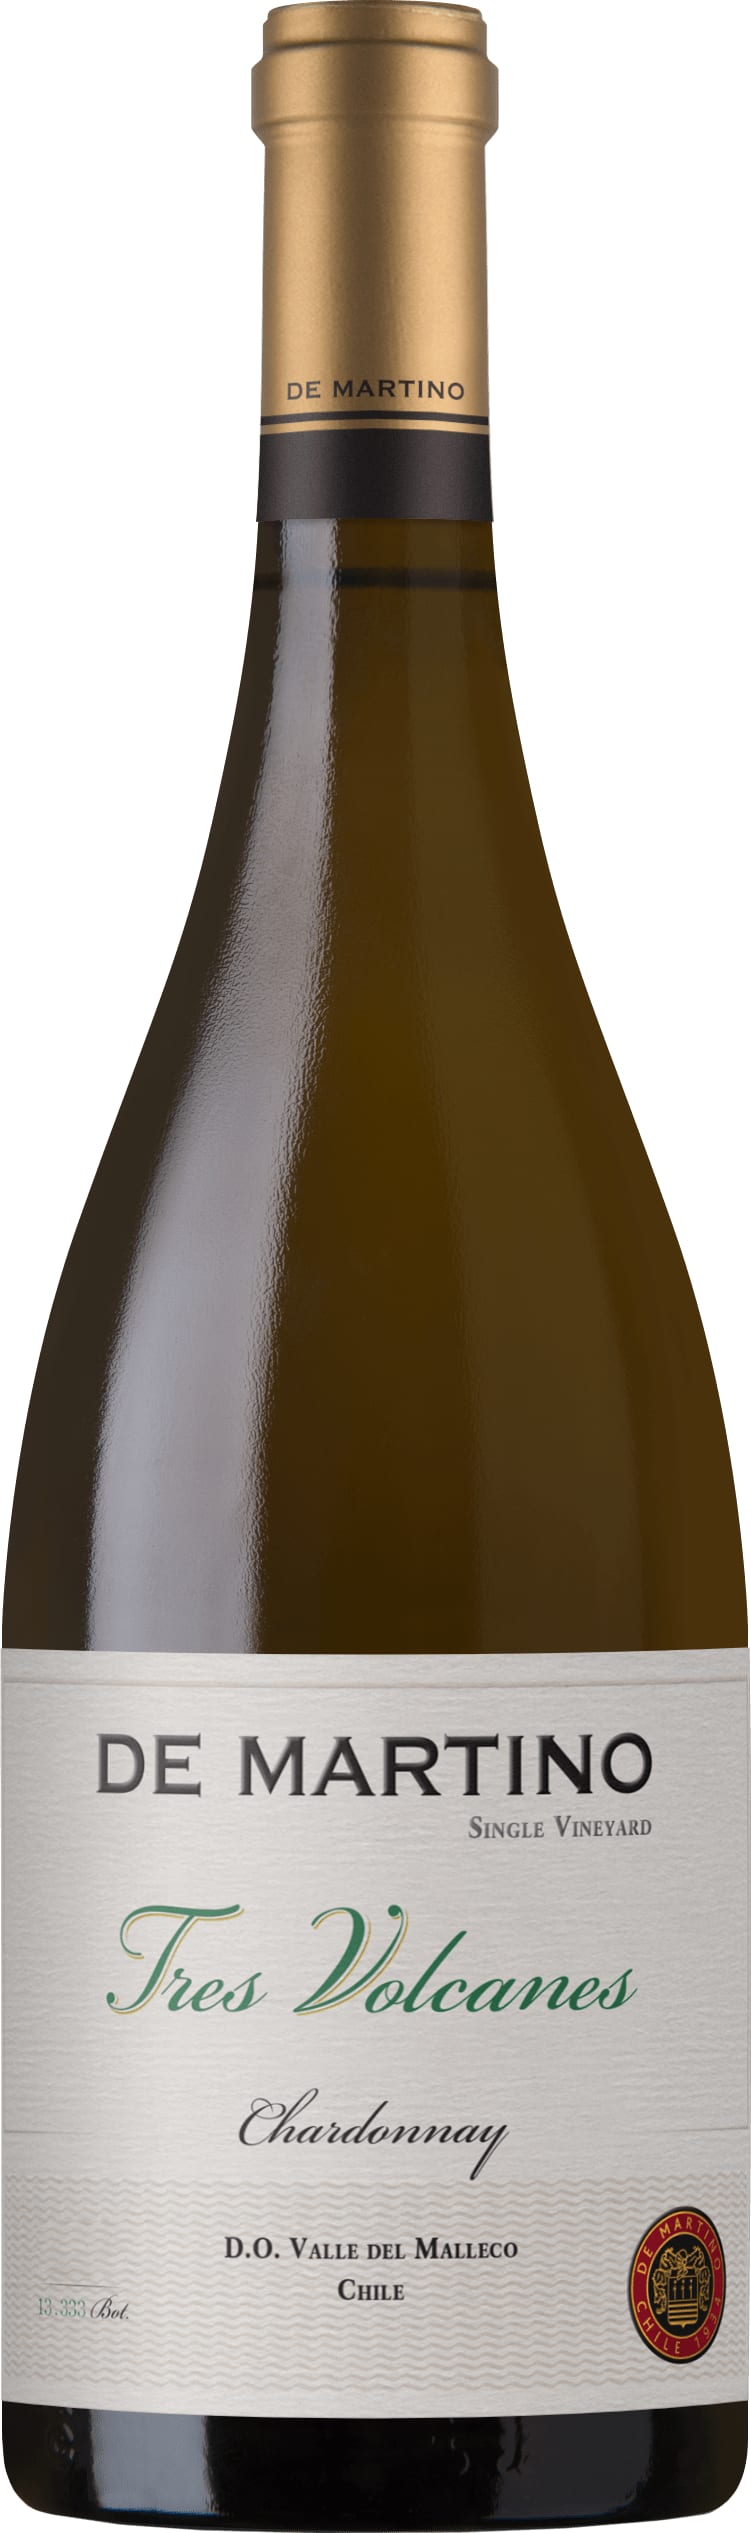 De Martino Single Vineyard Chardonnay 'Tres Volcanes' 2017 75cl - Buy De Martino Wines from GREAT WINES DIRECT wine shop